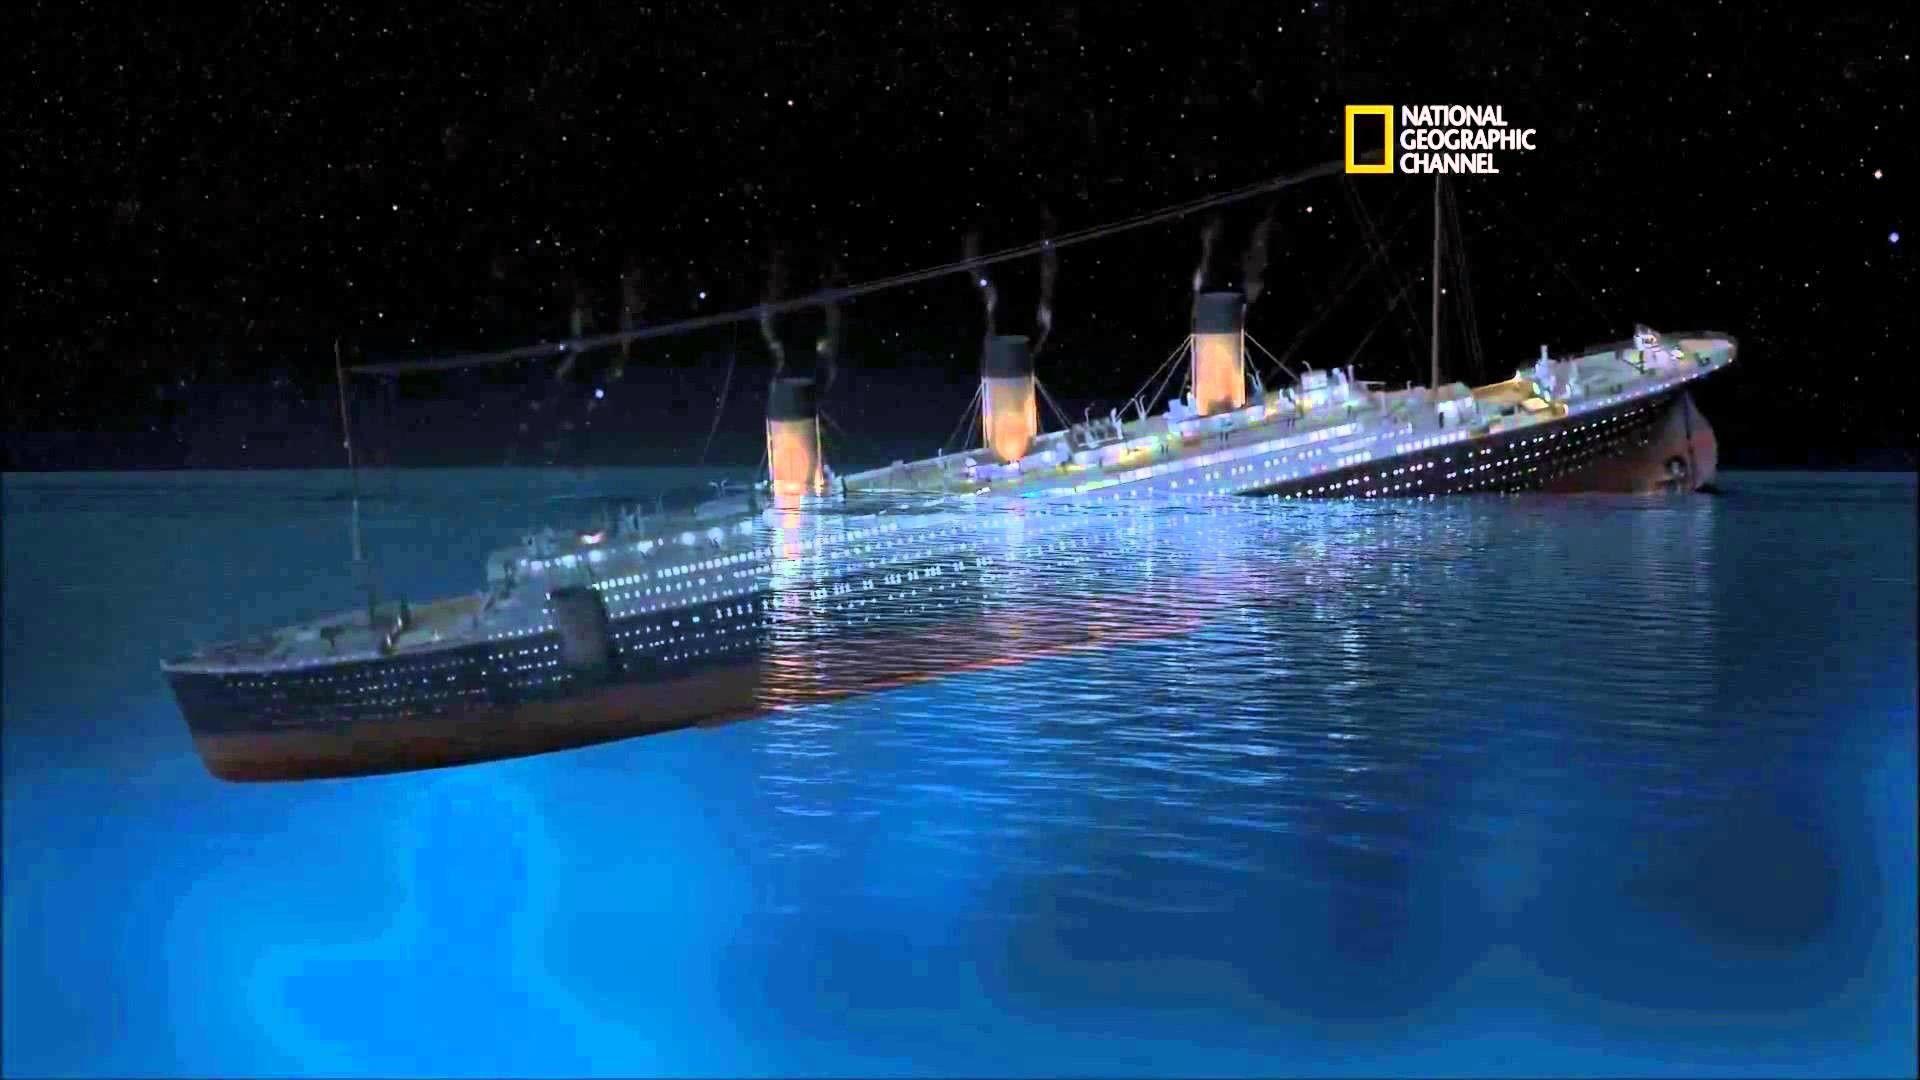 Titanic Sinking Wallpaper